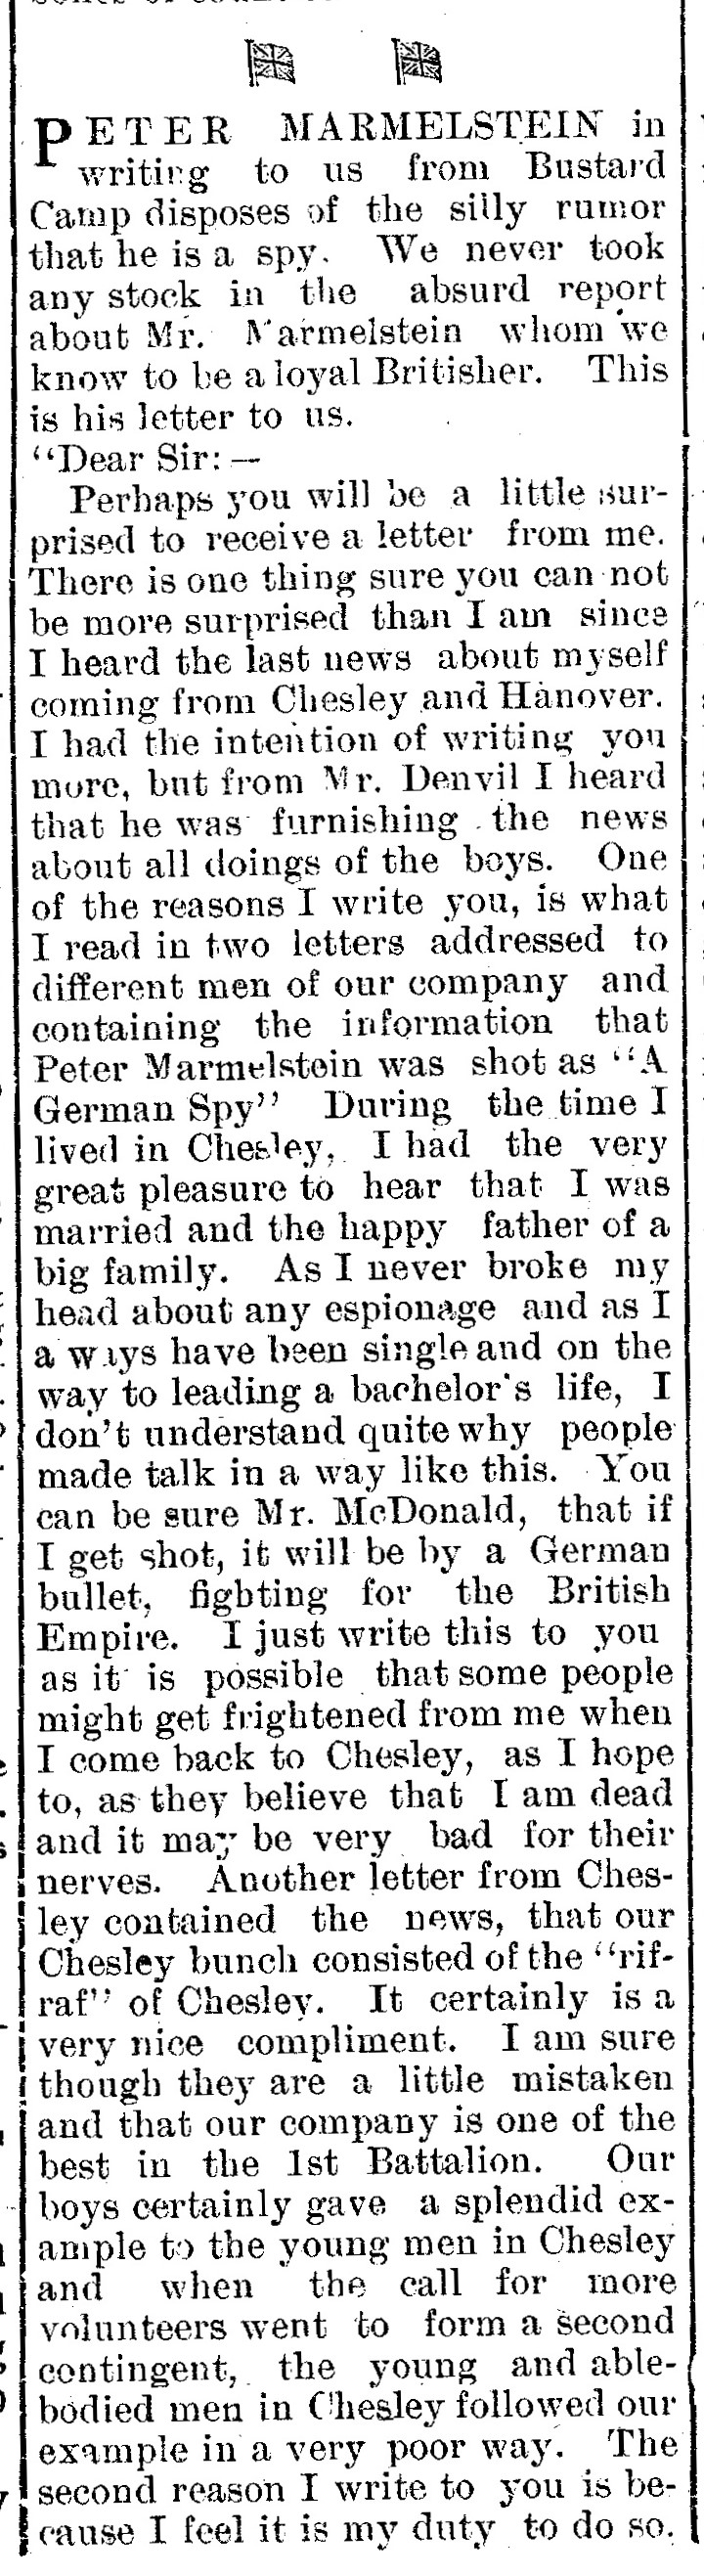 The Chesley Enterprise, December 24, 1914 p. 1